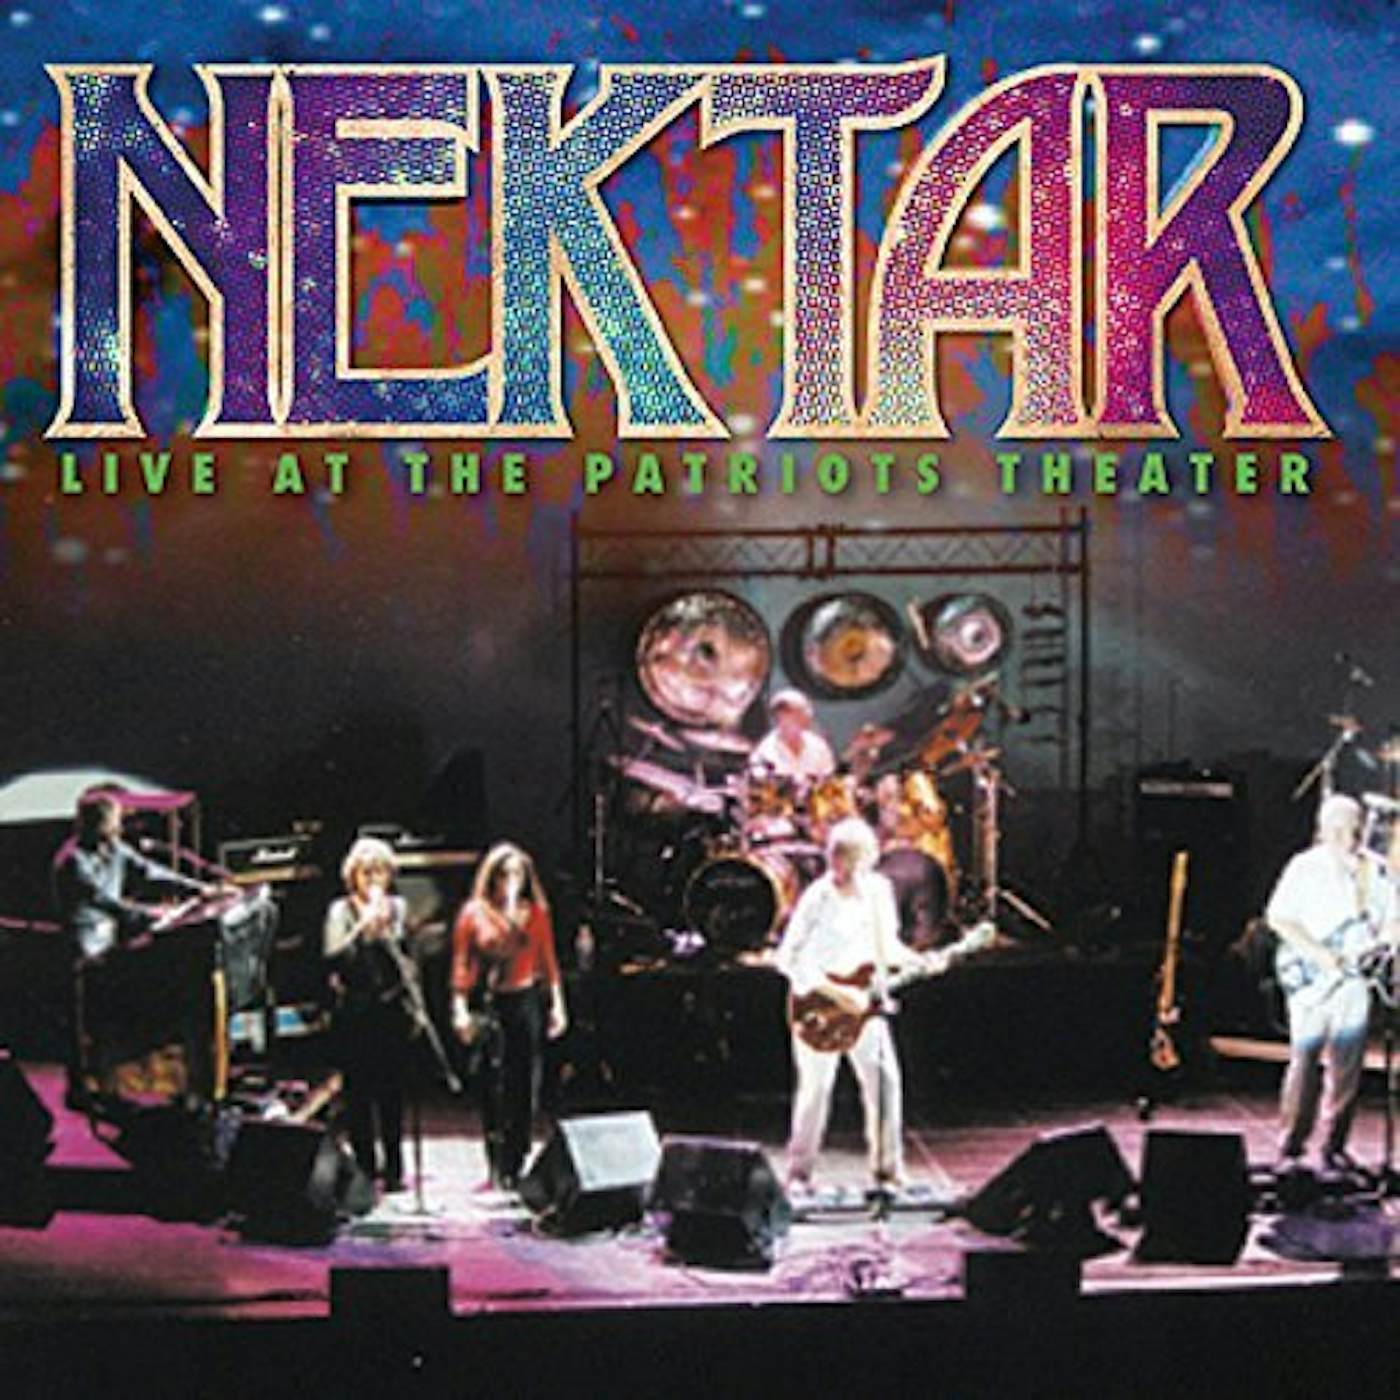 Nektar LIVE AT THE PATRIOTS THEATER CD